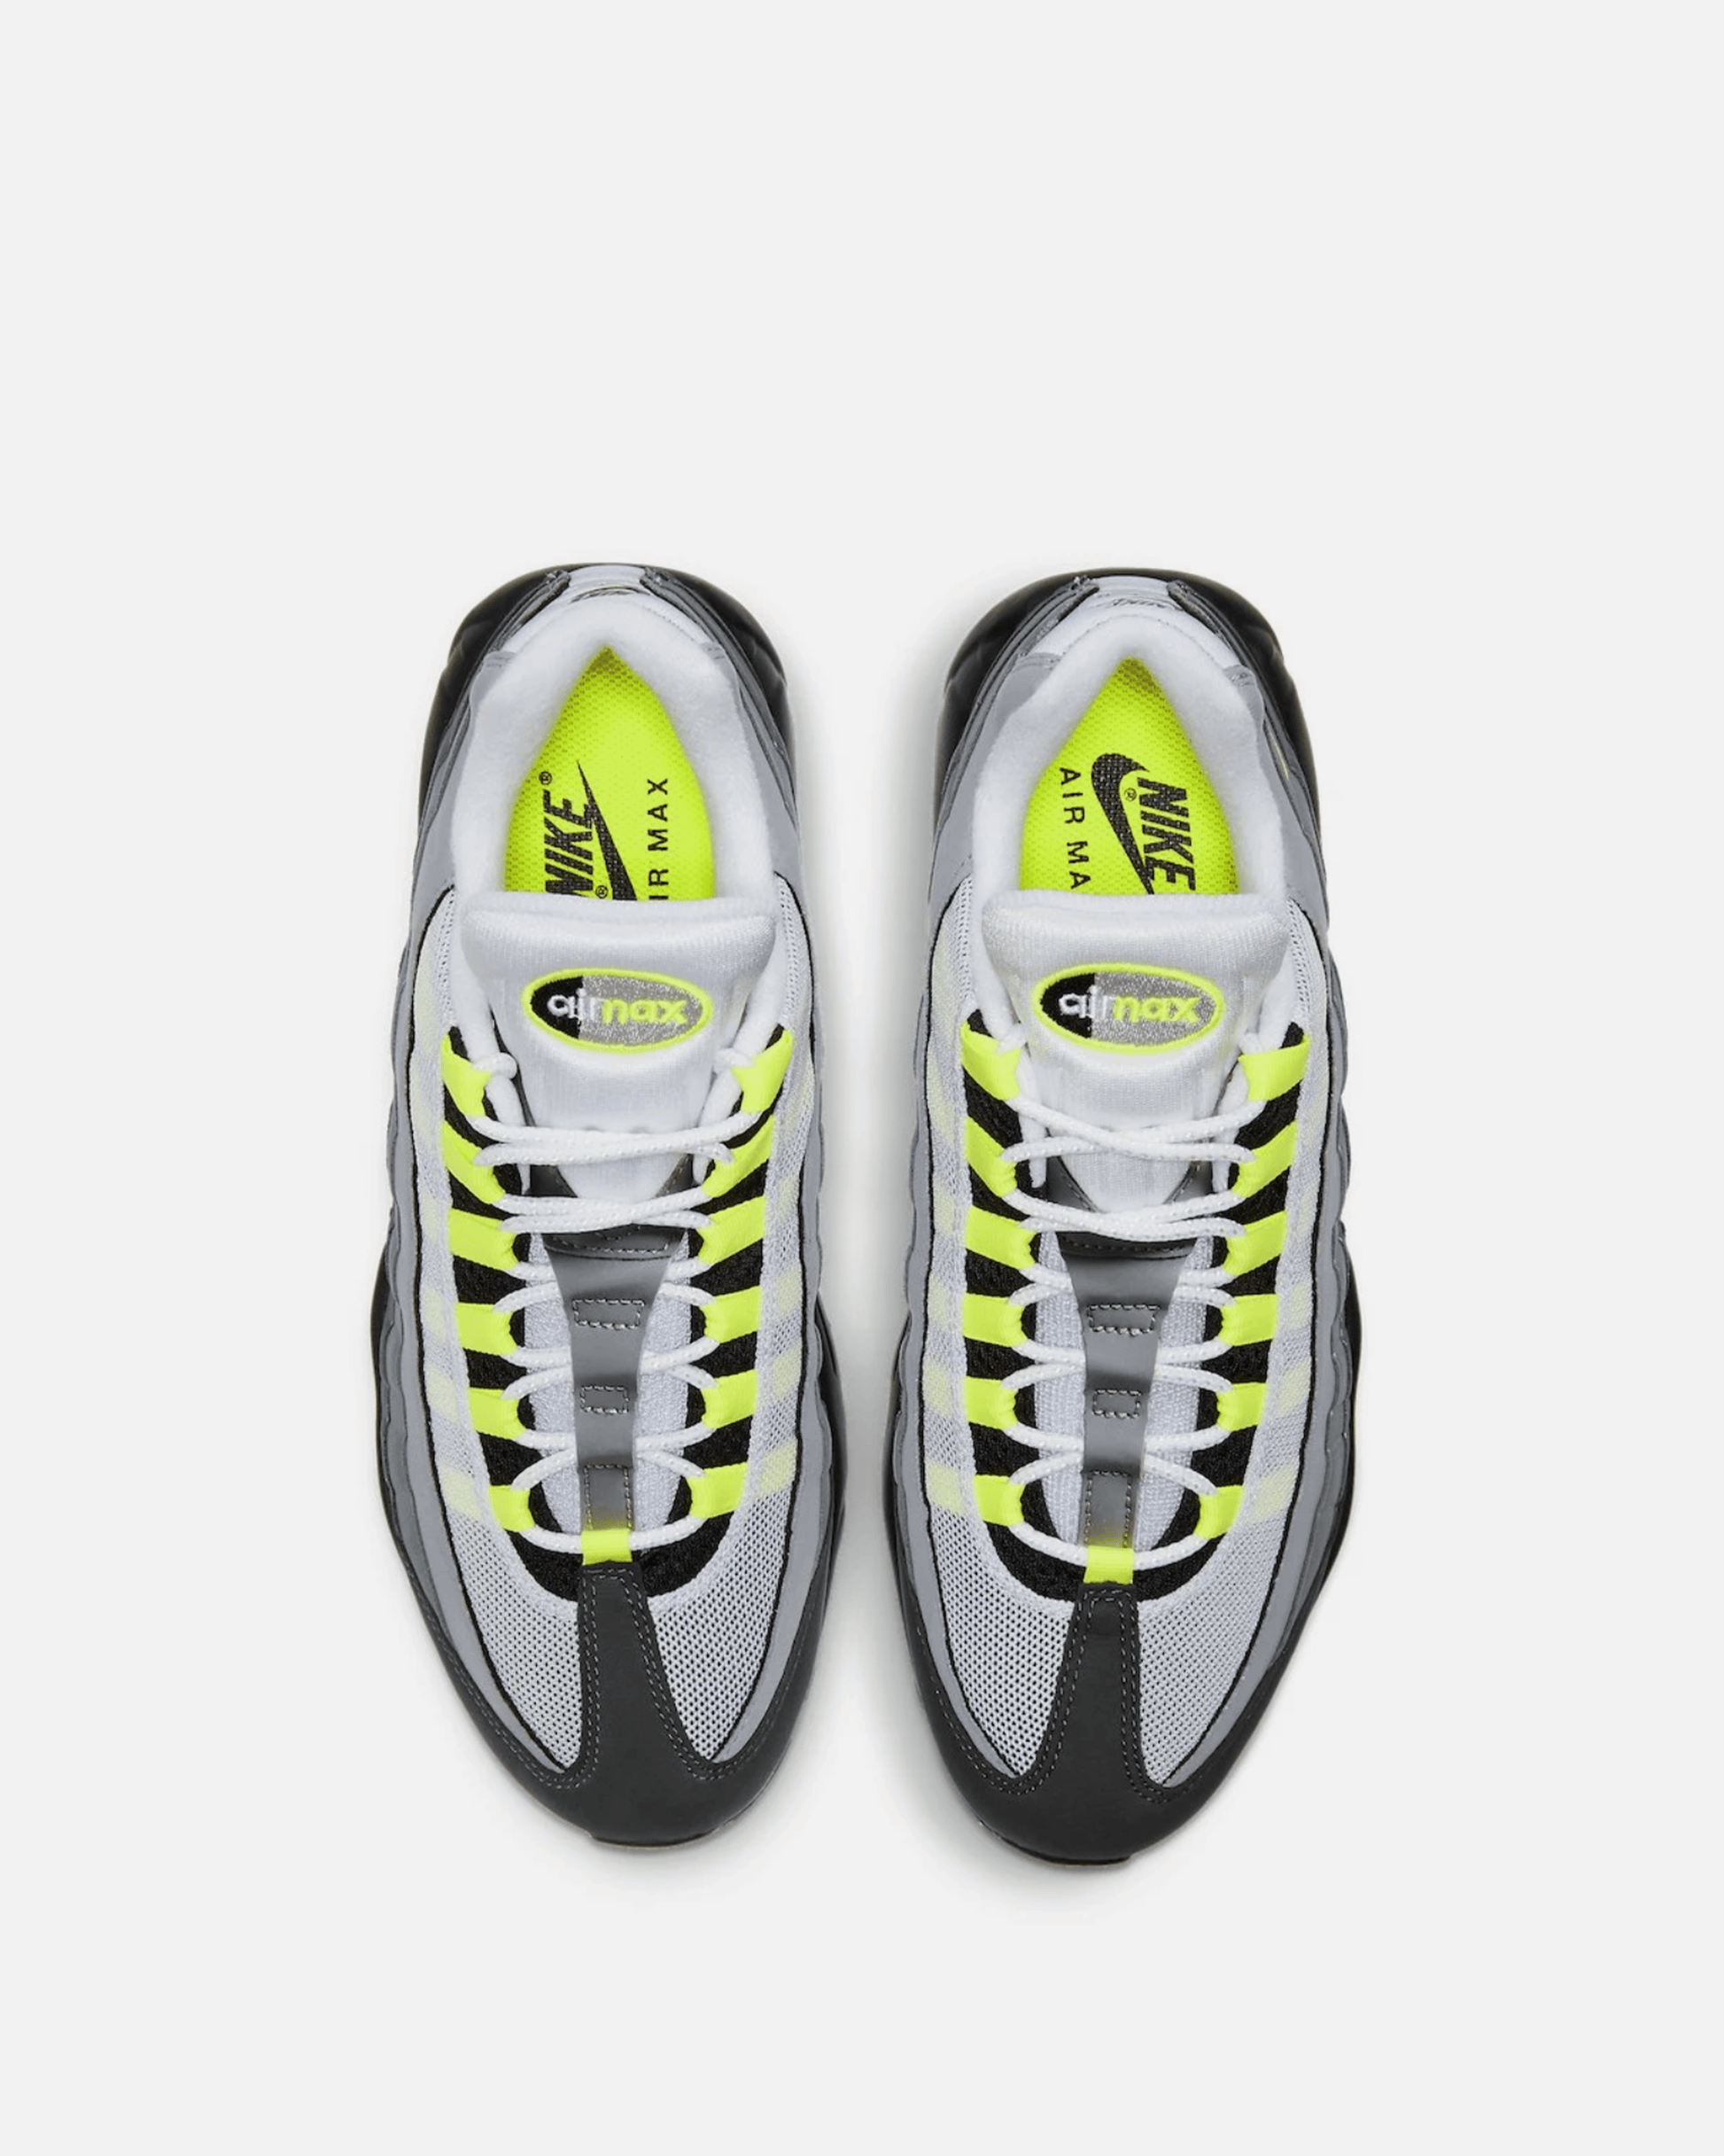 Nike Men's Sneakers Air Max 95 OG in 'Neon'